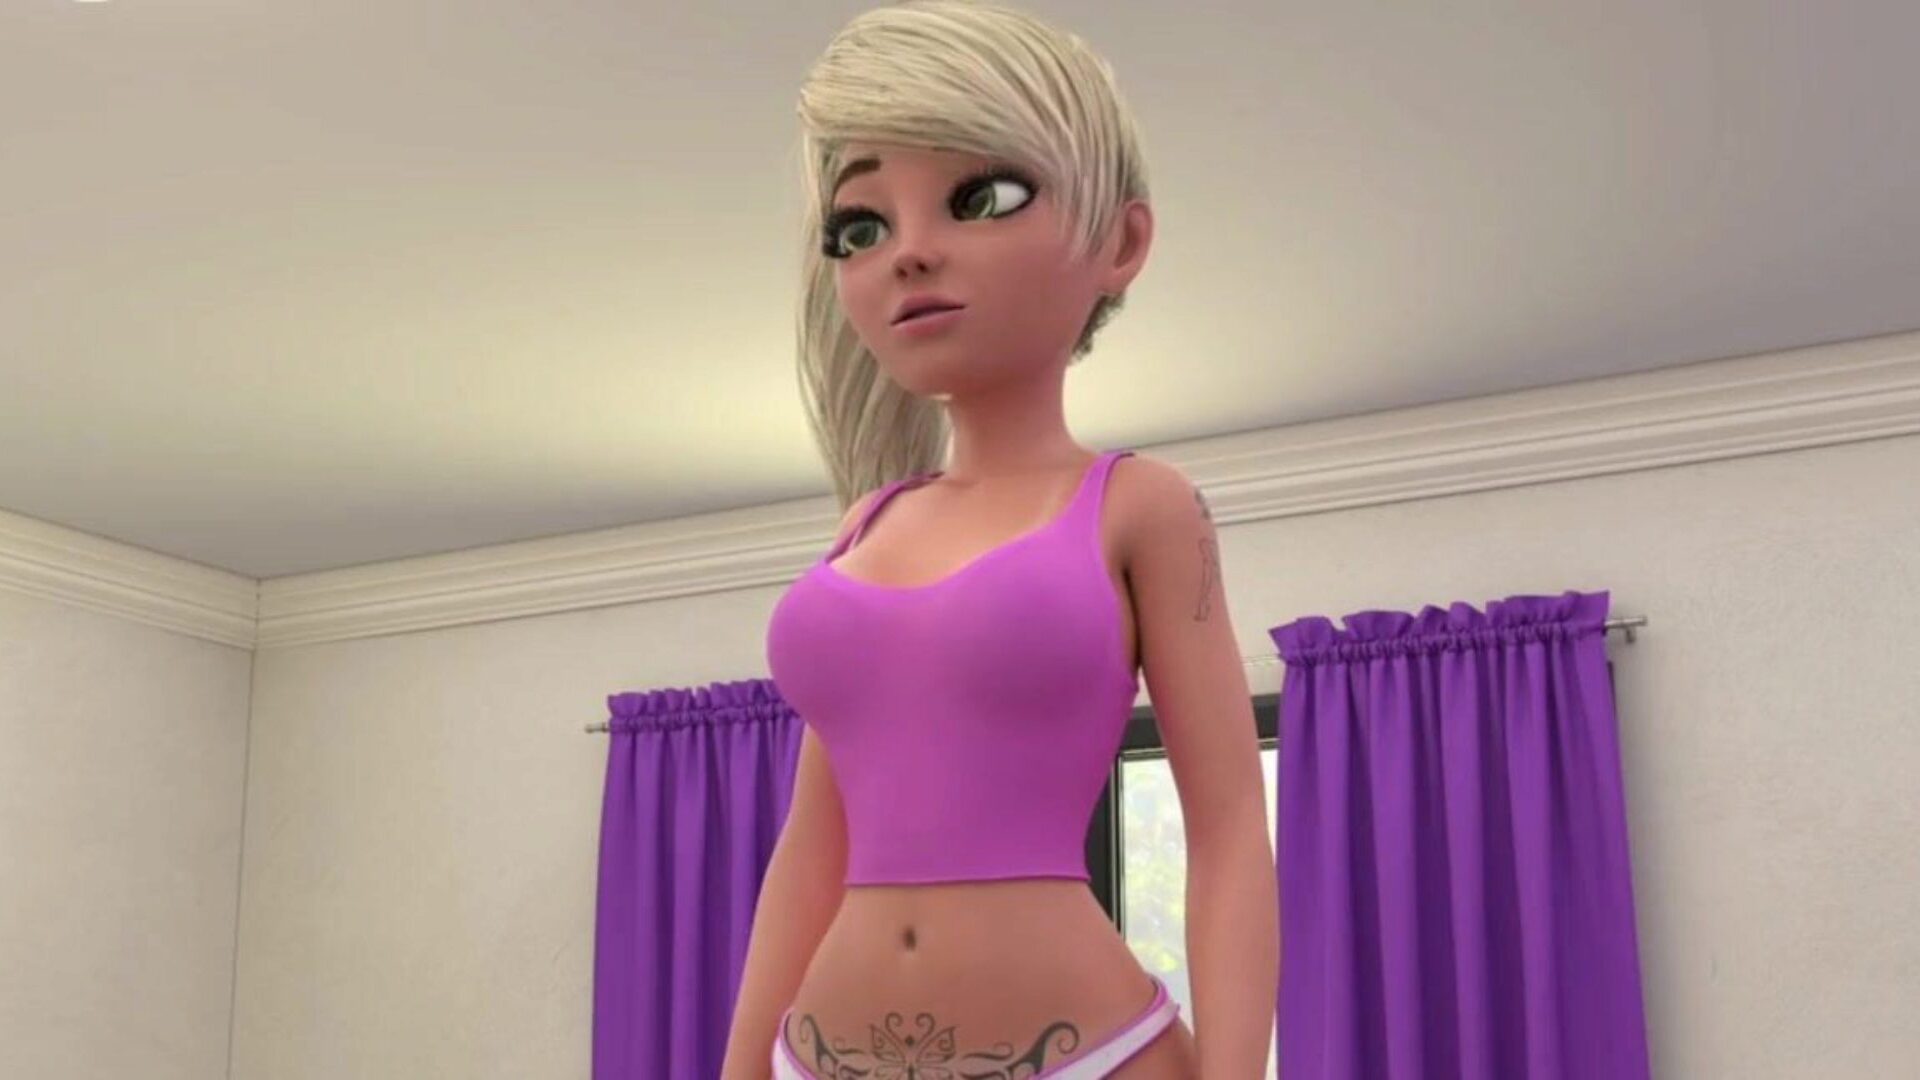 Huge dong dickgirl copulates mamma - 3D Futa Animation (ENG Voices)